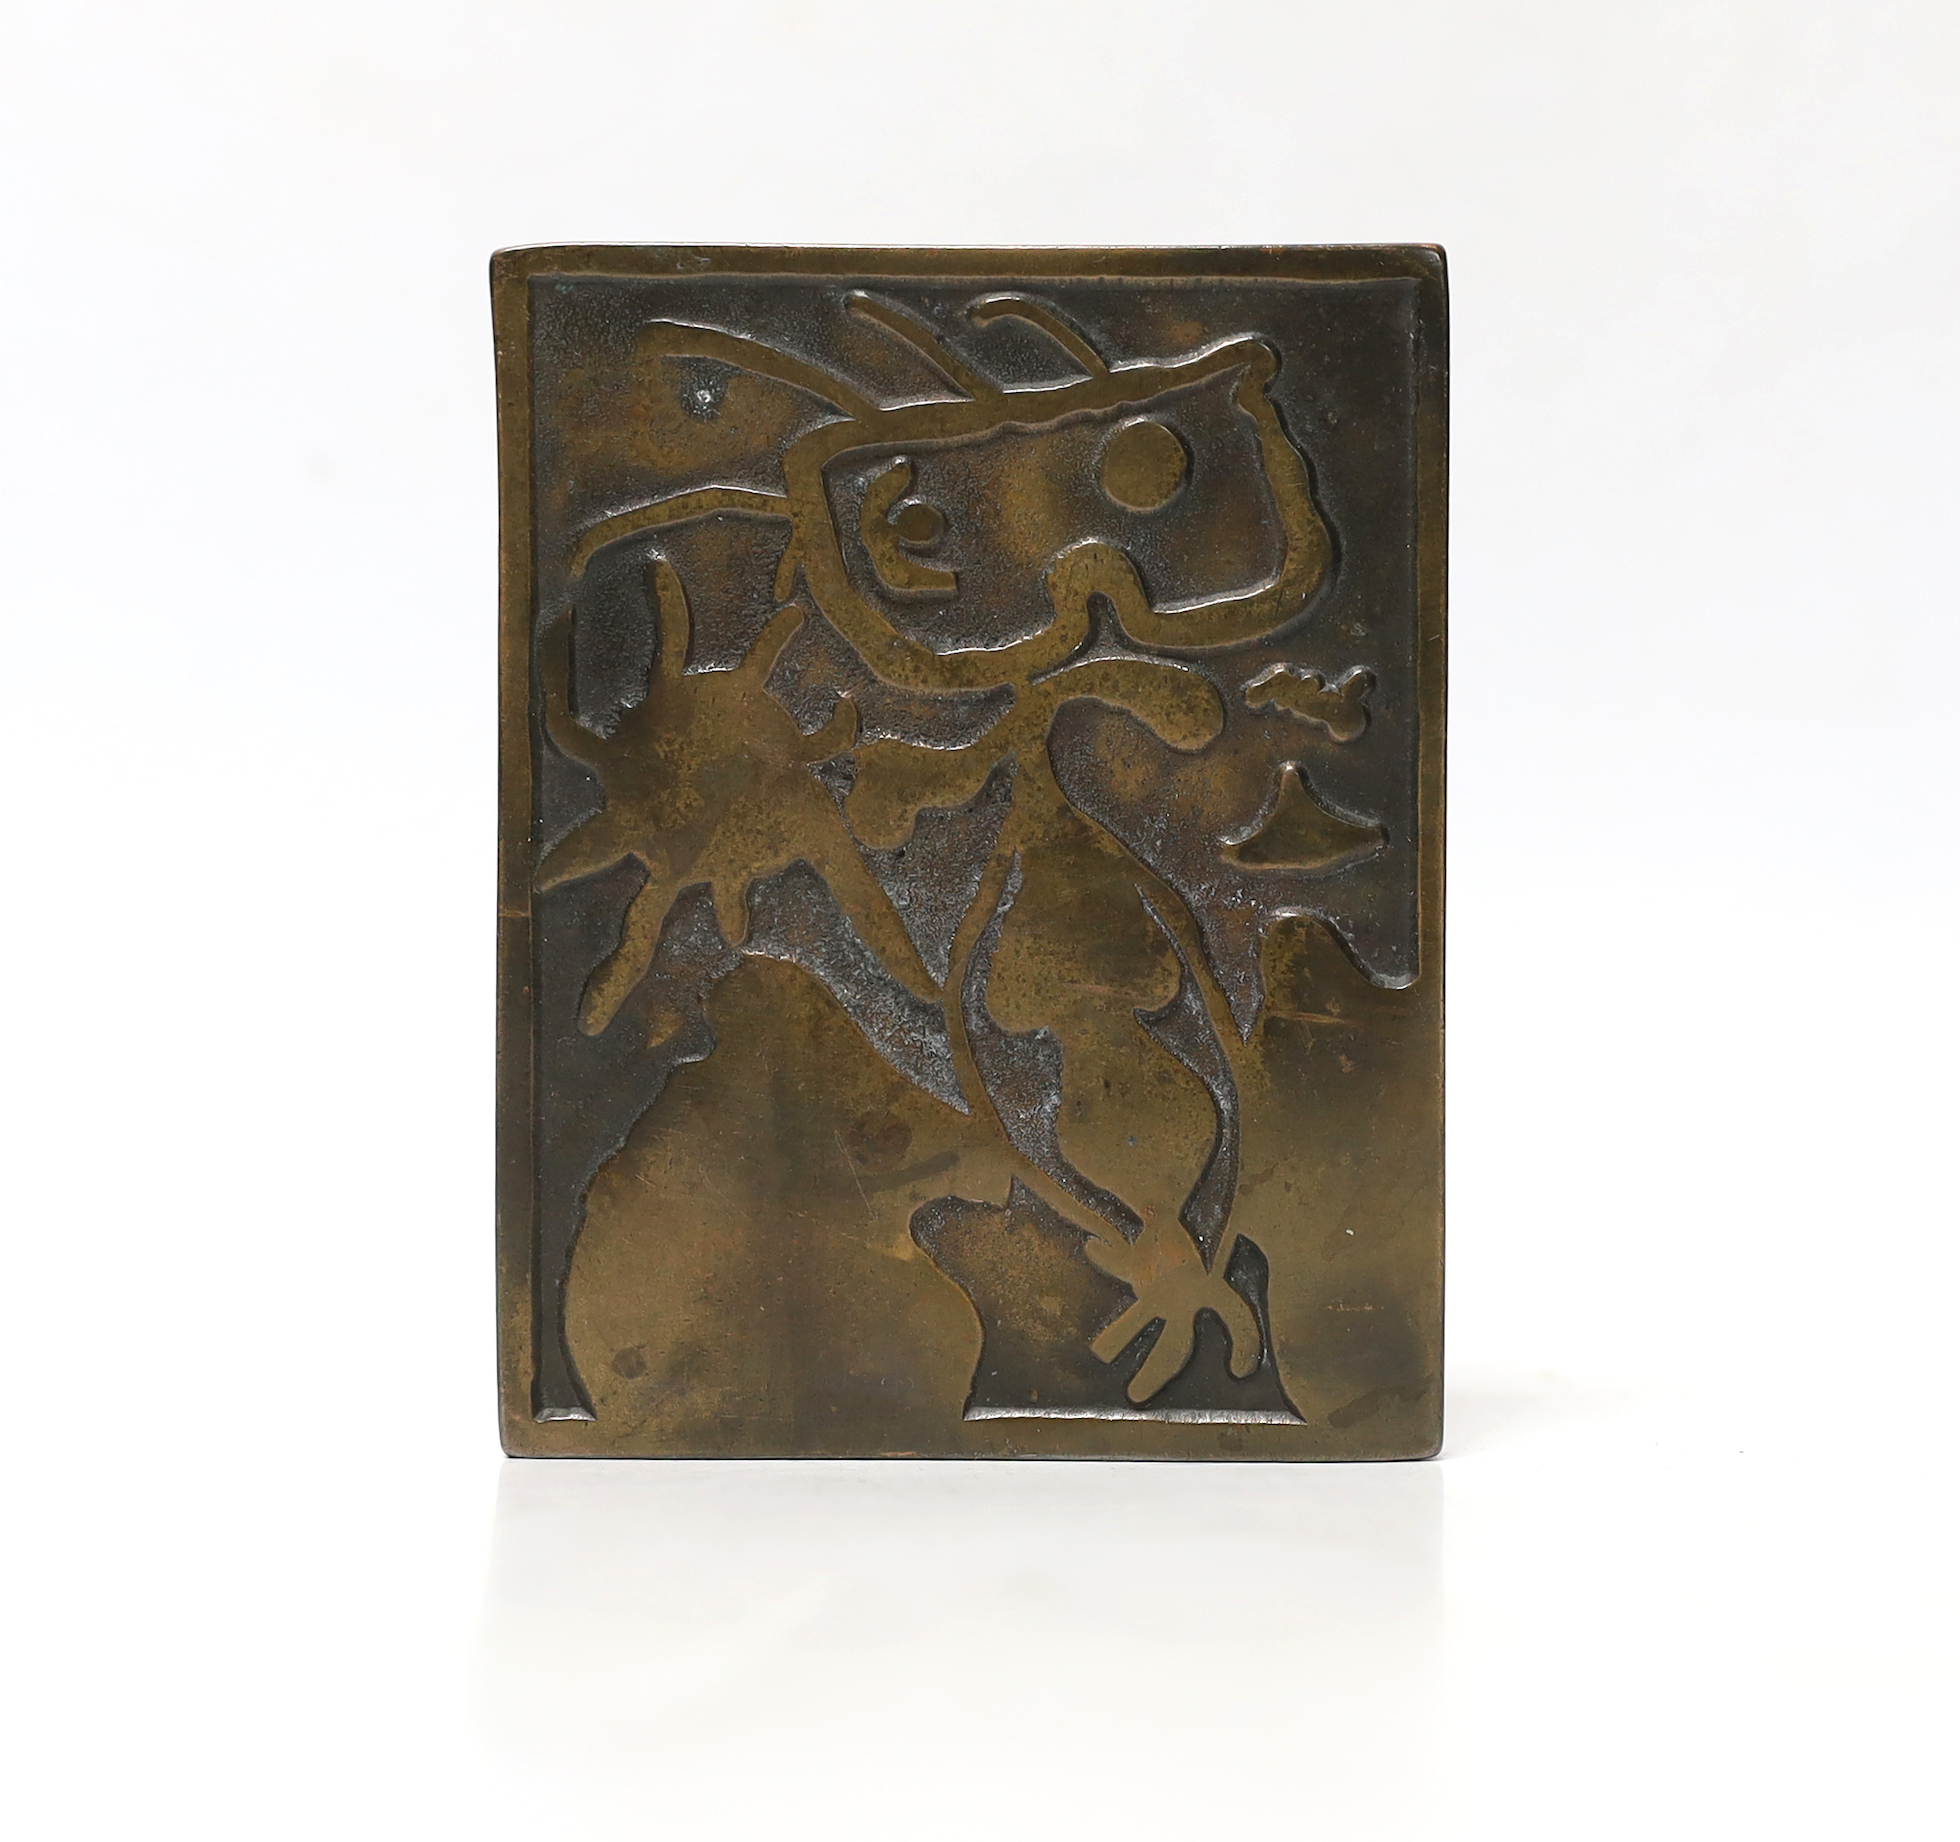 Joan Miro, XX Siecle, No.4 - 1938, bronze plaque, published by Fundacio Joan Miro, Barcelona, H.11cm W.8.5cm